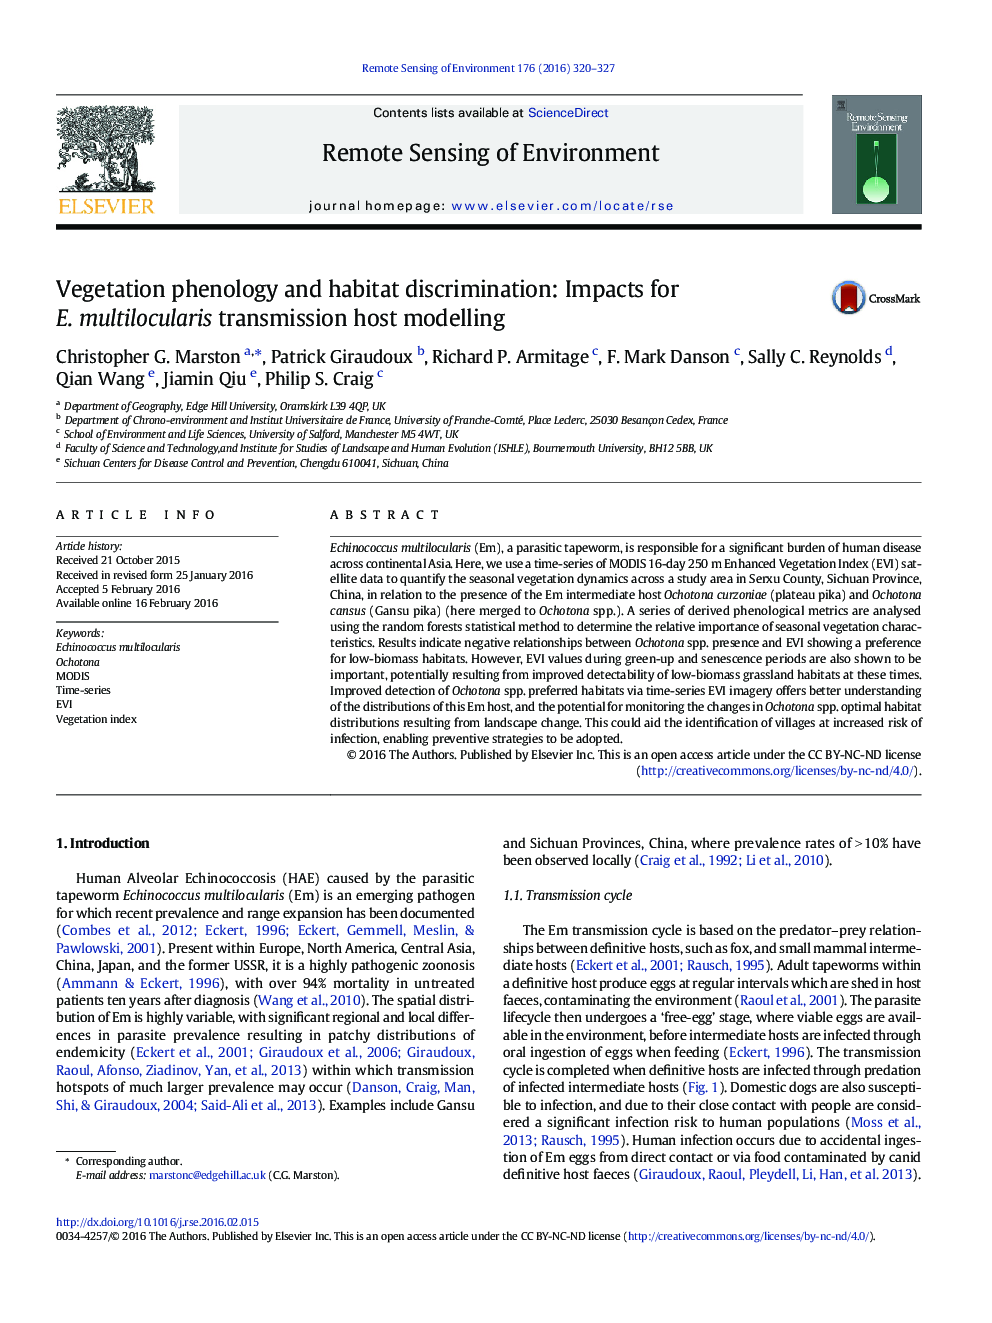 Vegetation phenology and habitat discrimination: Impacts for E. multilocularis transmission host modelling